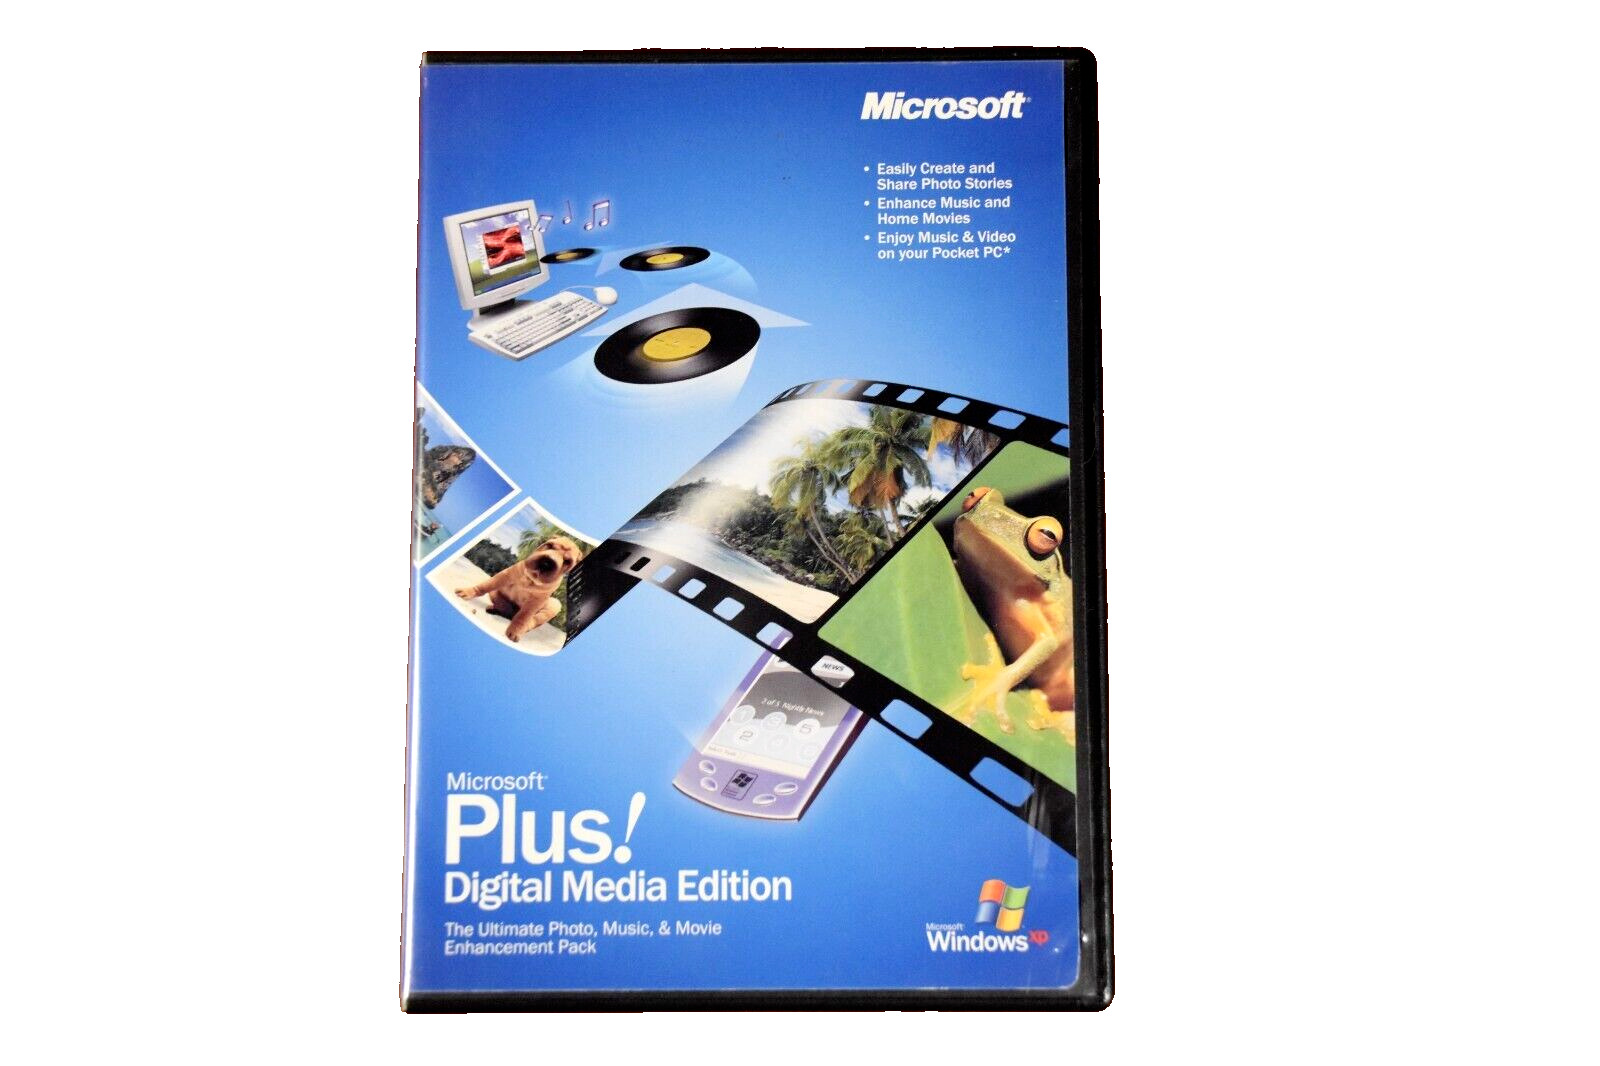 Microsoft Plus Digital Media Edition for Windows XP with Product Key & Brochure